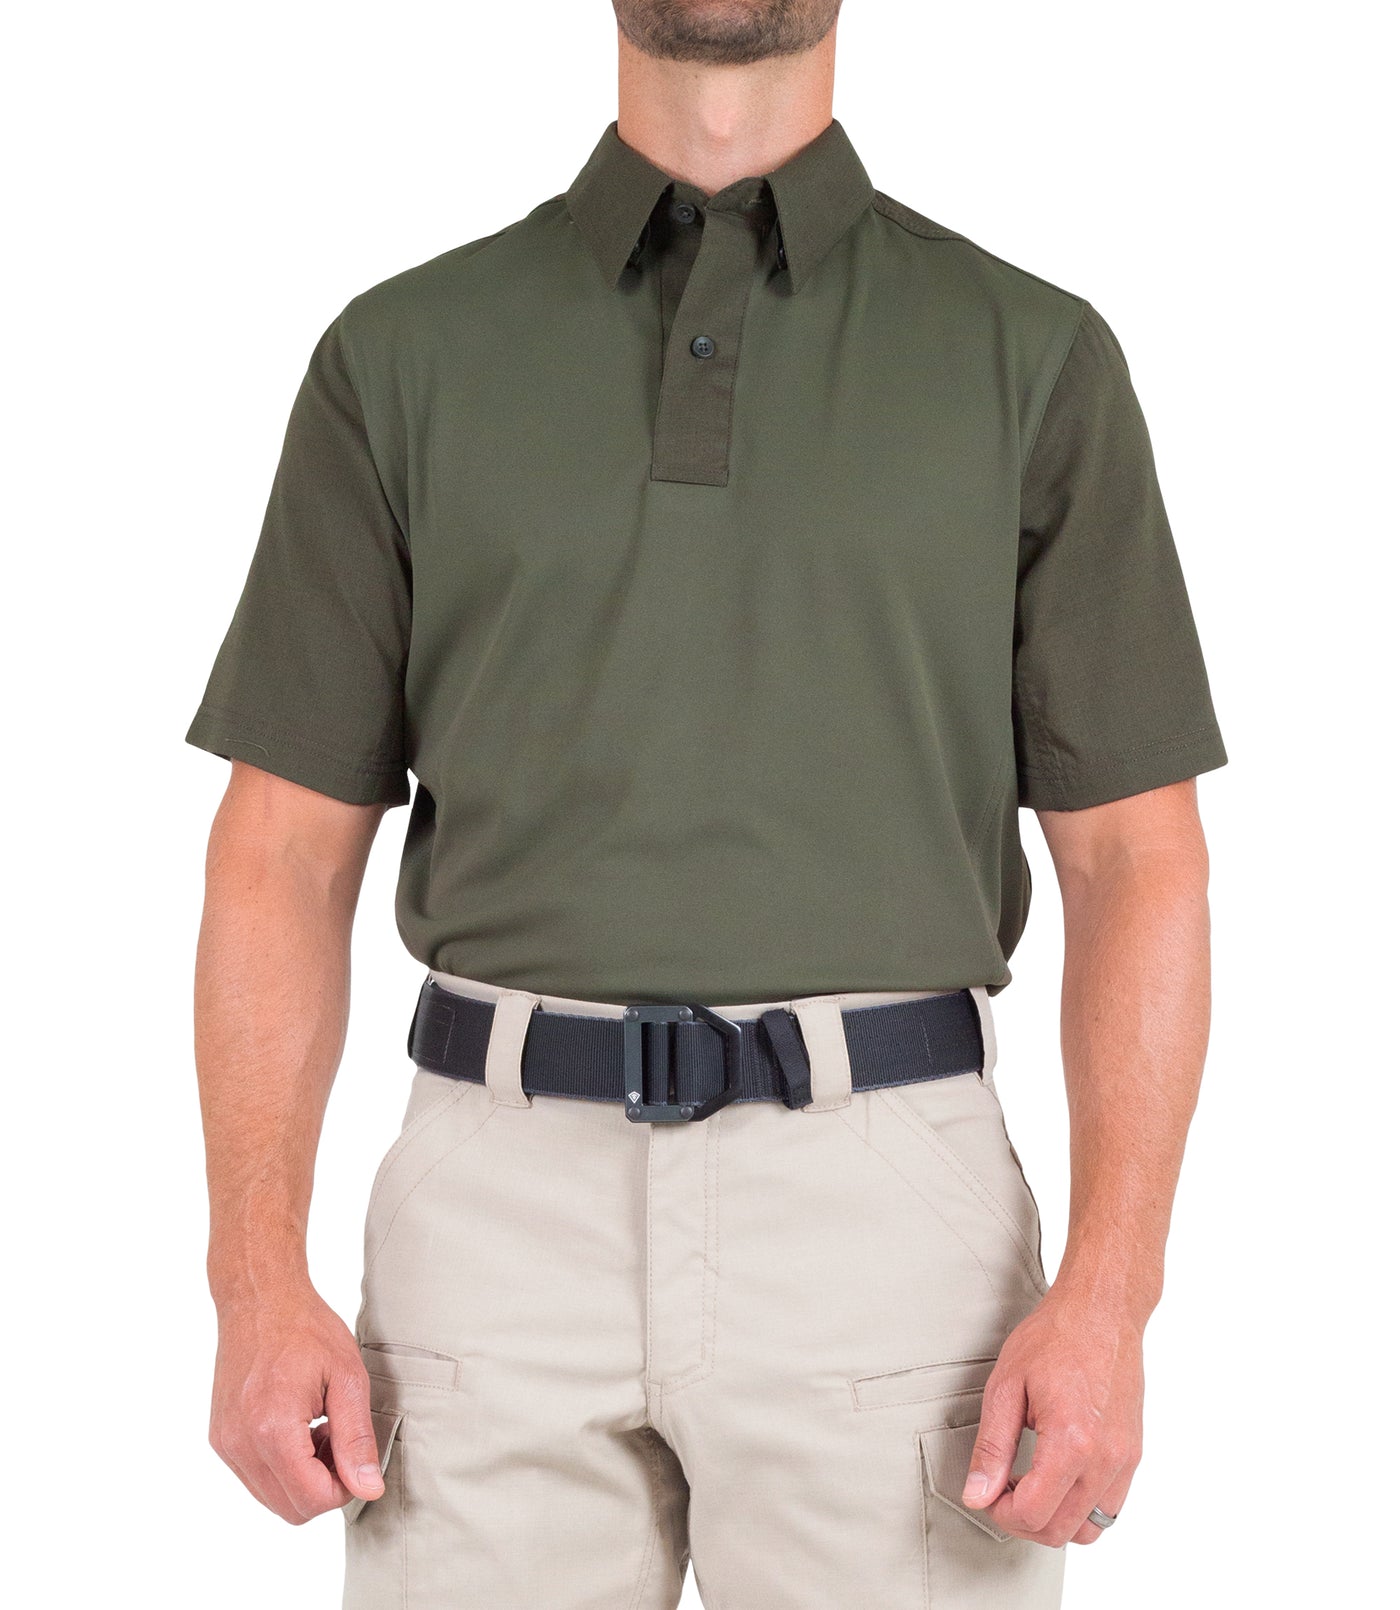 Front of Men's V2 Pro Performance Short Sleeve Shirt in OD Green